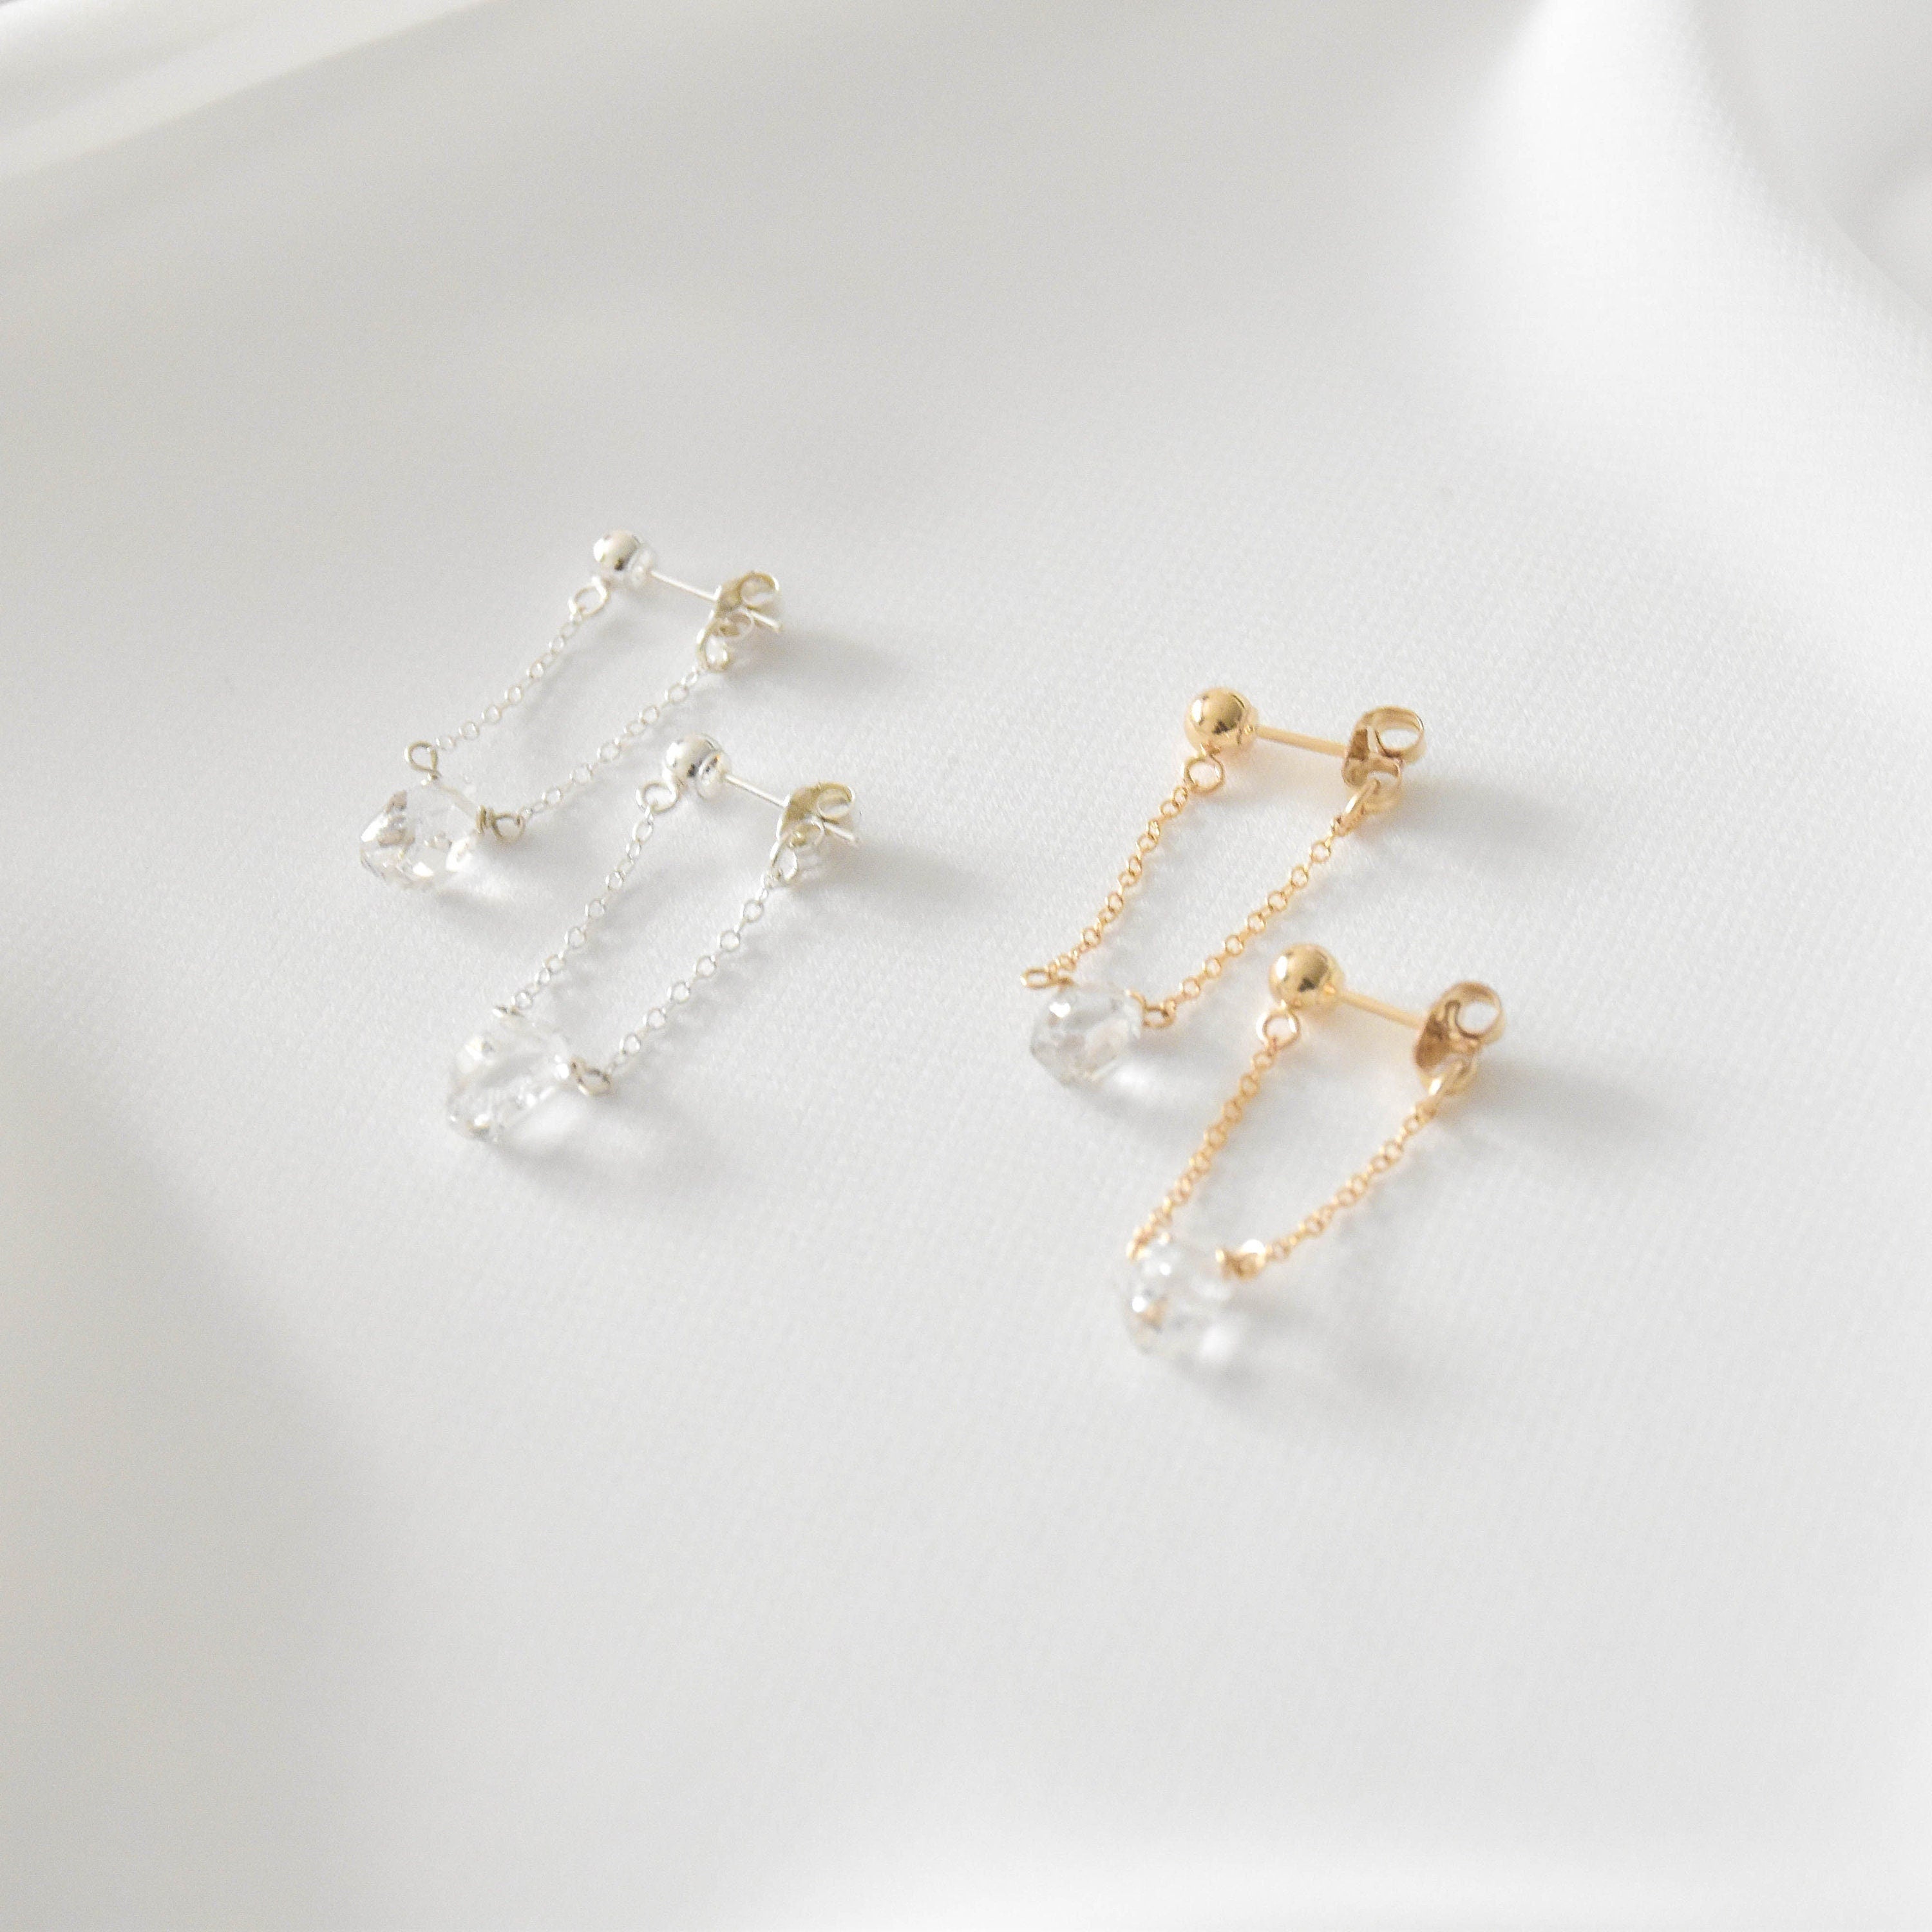 Herkimer Diamond Earrings - Crystal Earrings, Crystal Drop Earrings, Crystal Dangle Earrings, Quartz Earrings, Clear Crystal |GFE00036